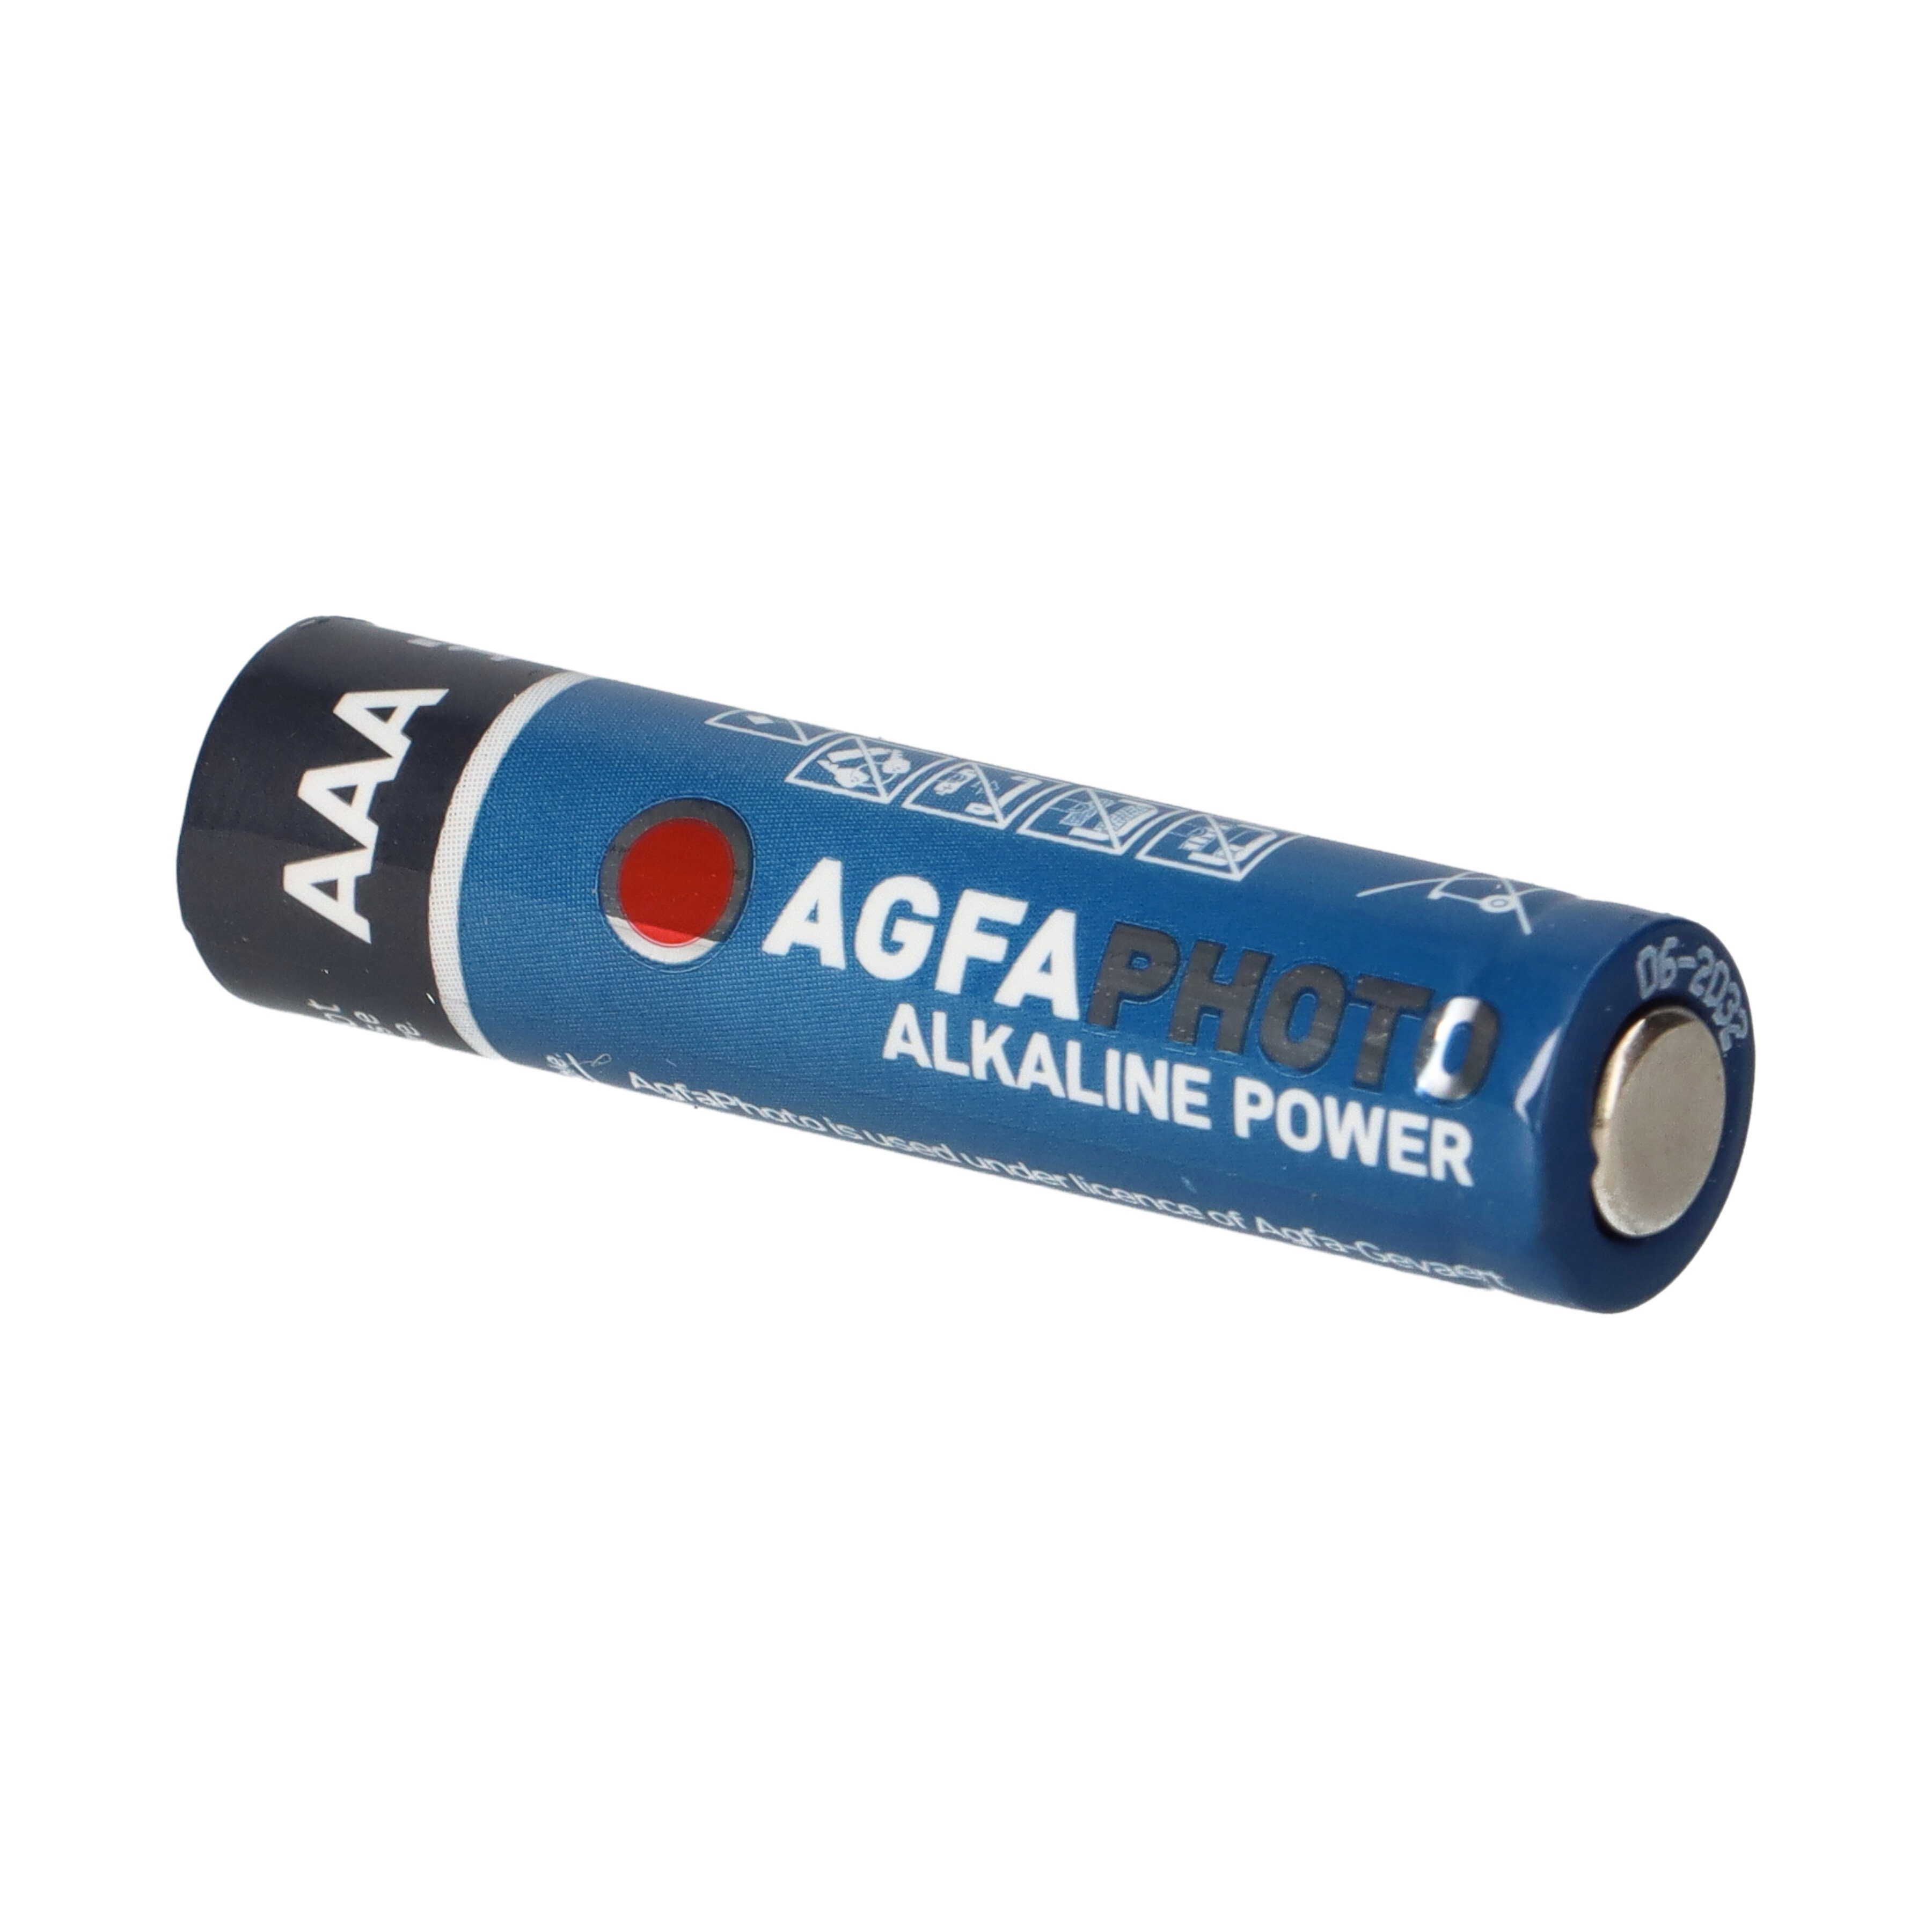 24 Alkaline AGFAPHOTO Stück 1.5V Micro AAA AgfaPhoto Batterie Batterie LR03